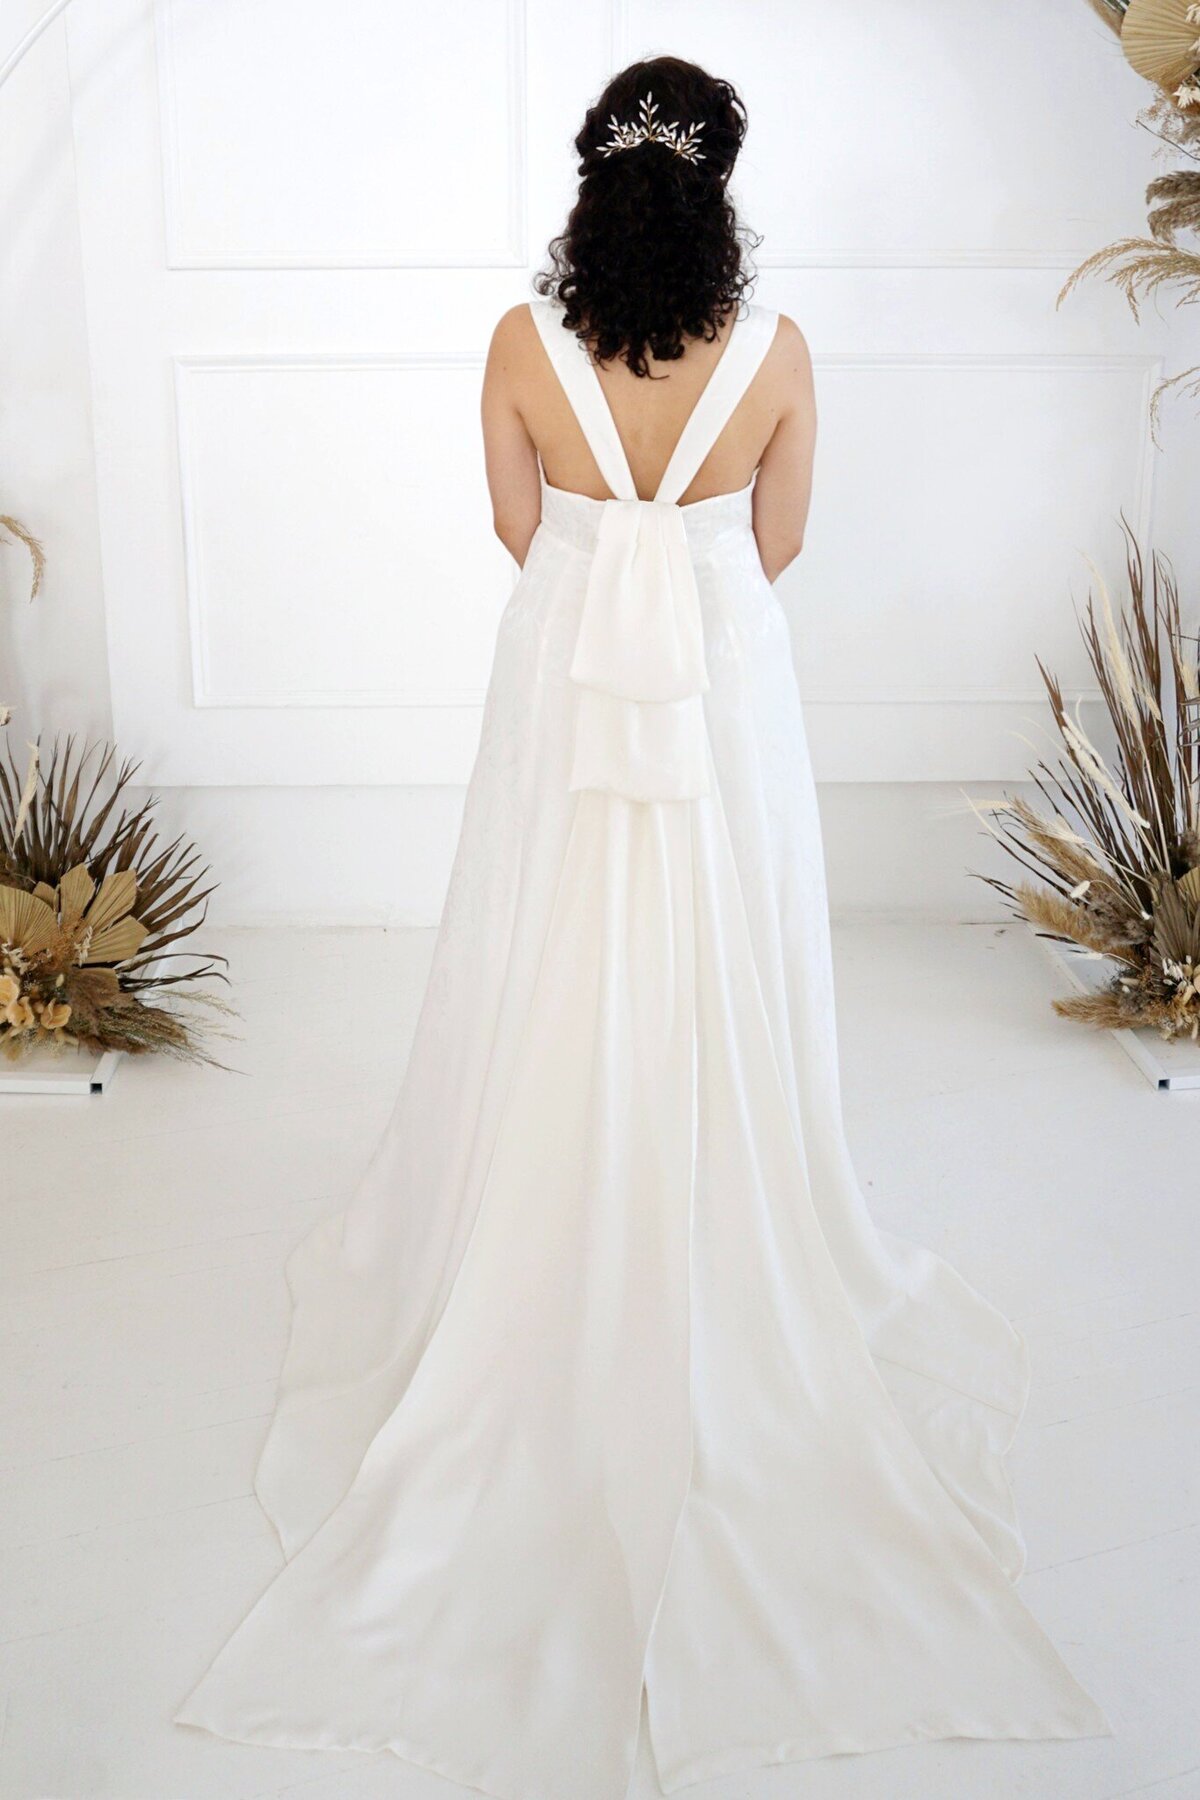 sol-v-back-wedding-dress-edith-elan-ethical-bridal-charleston-sc-9